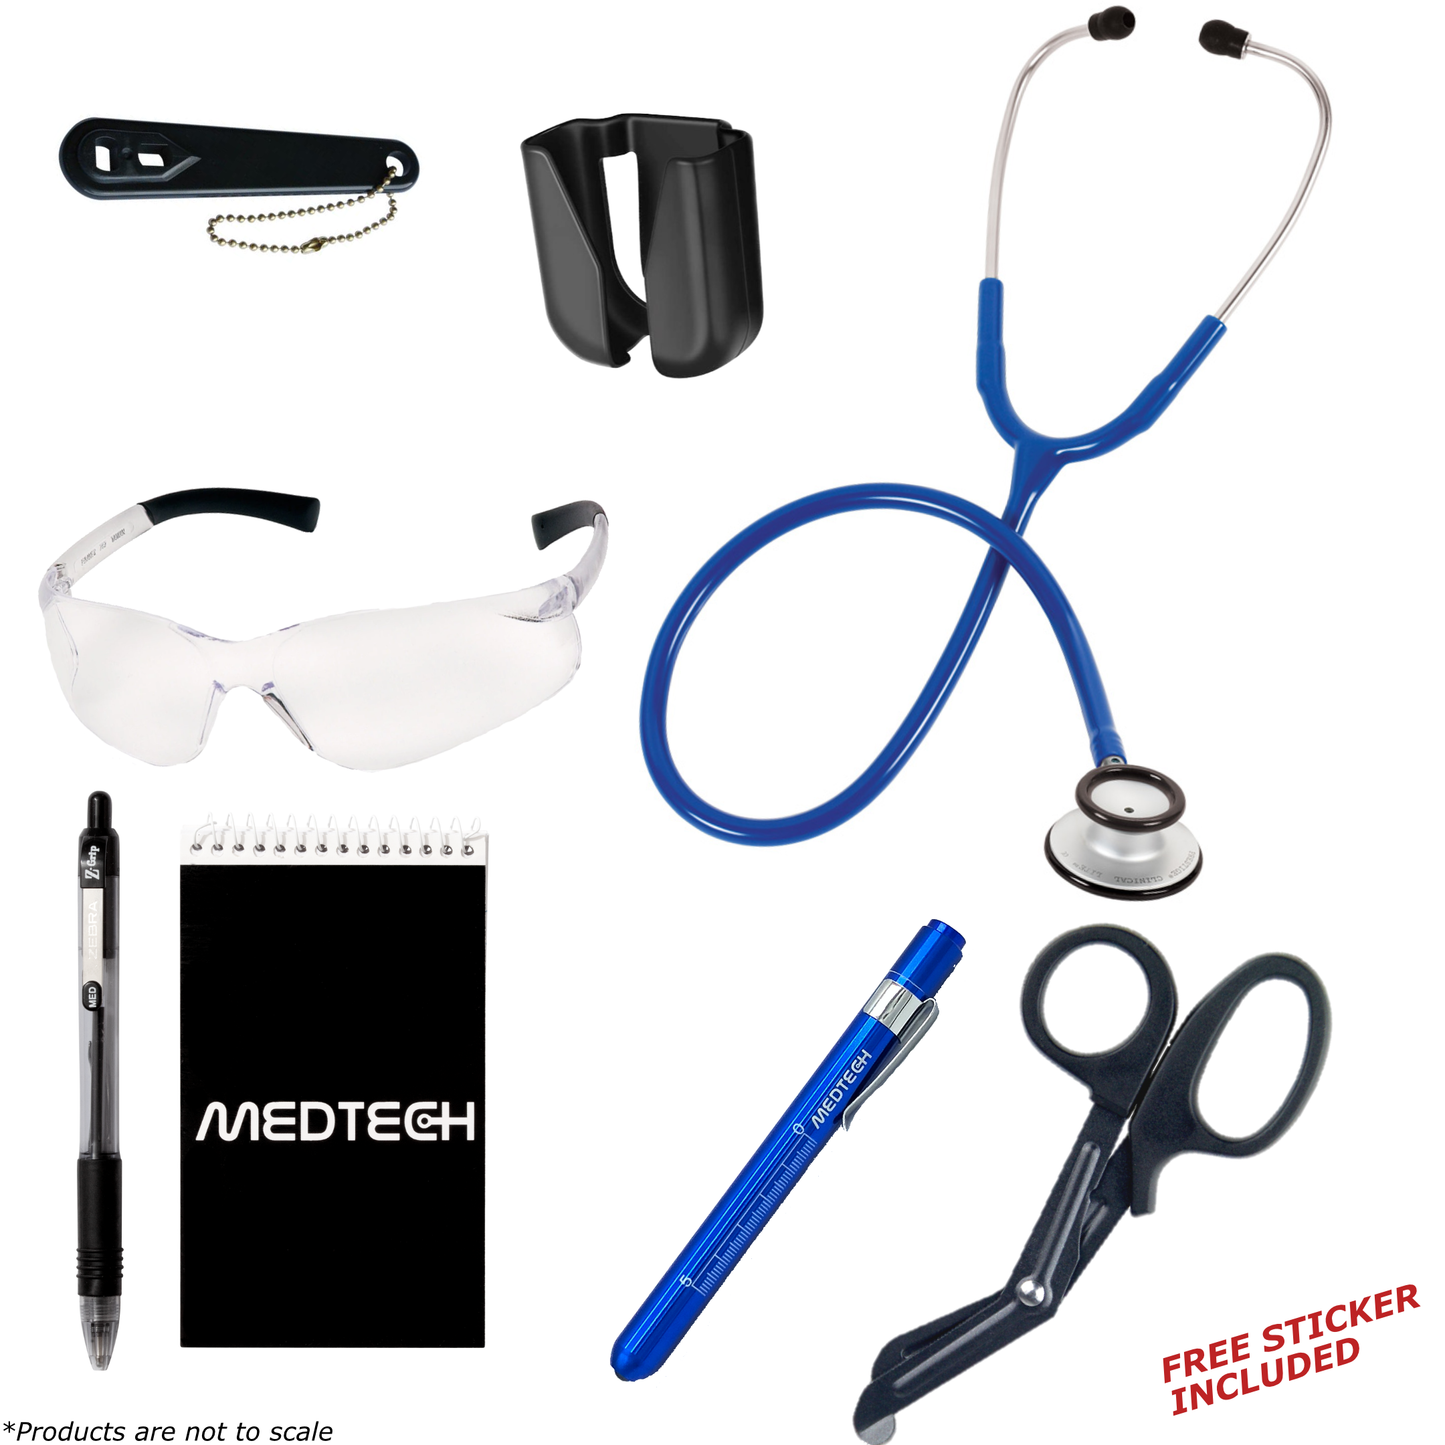 Basic Clinical Kit